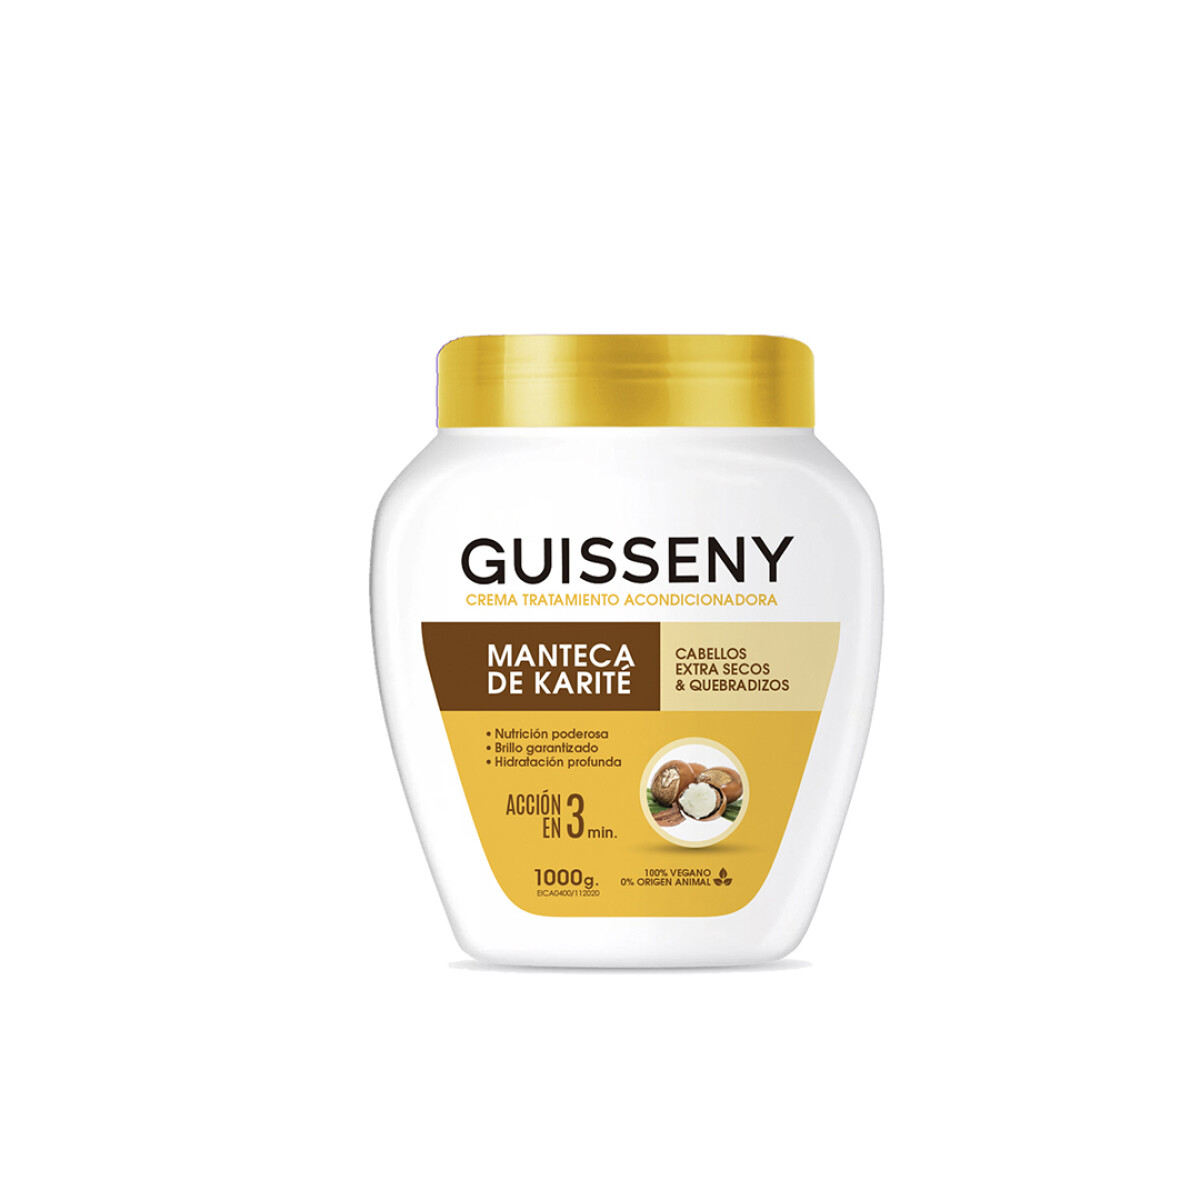 Guisseny Crema de Tratamiento Acondicionadora Manteca de Karité Guisseny - 1Kg 